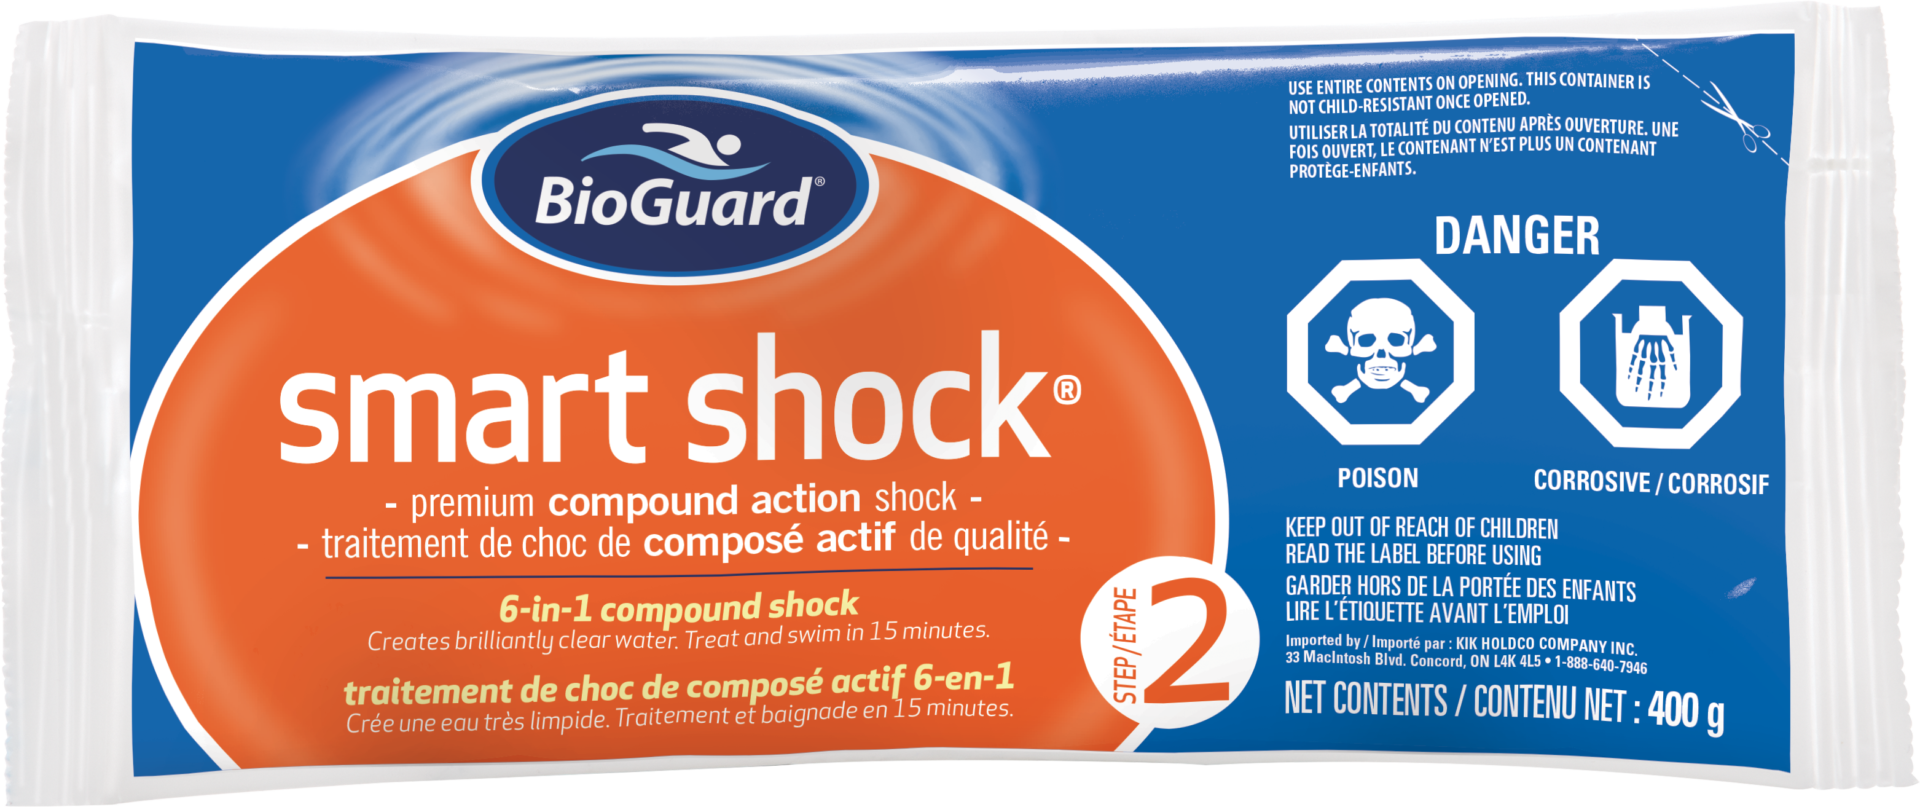 BioGuard Smart Shock 400g - SMART SHOCK CASE (12X400g)